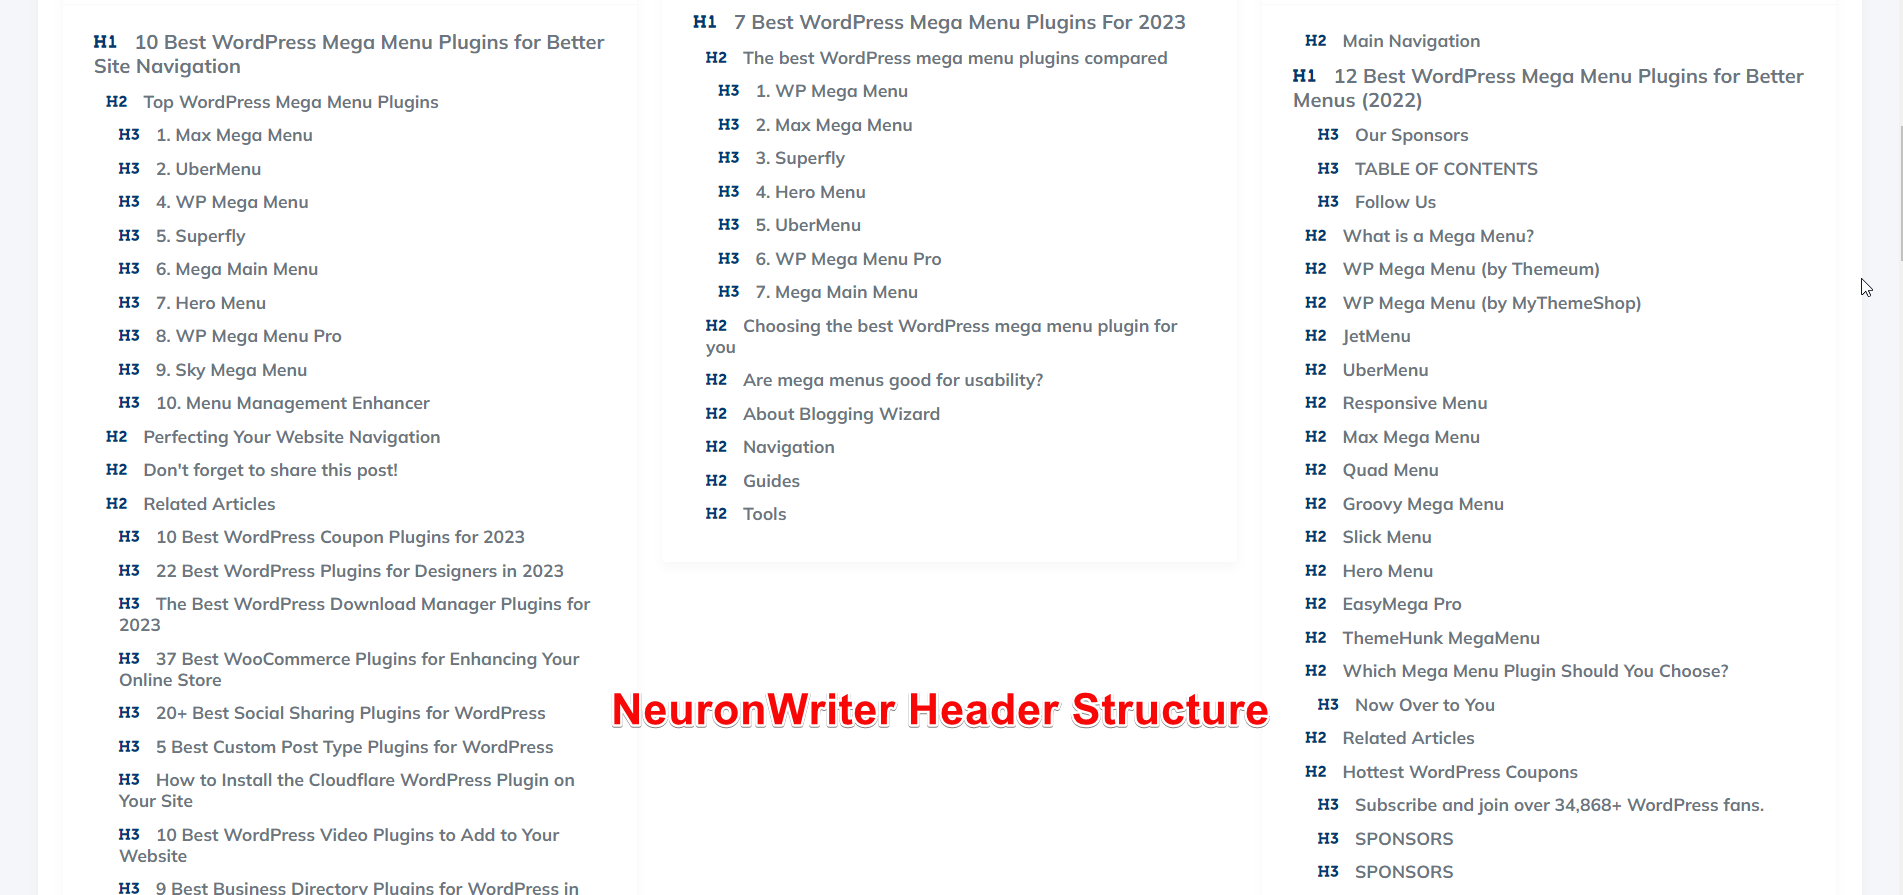 NeuronWriter content header structure